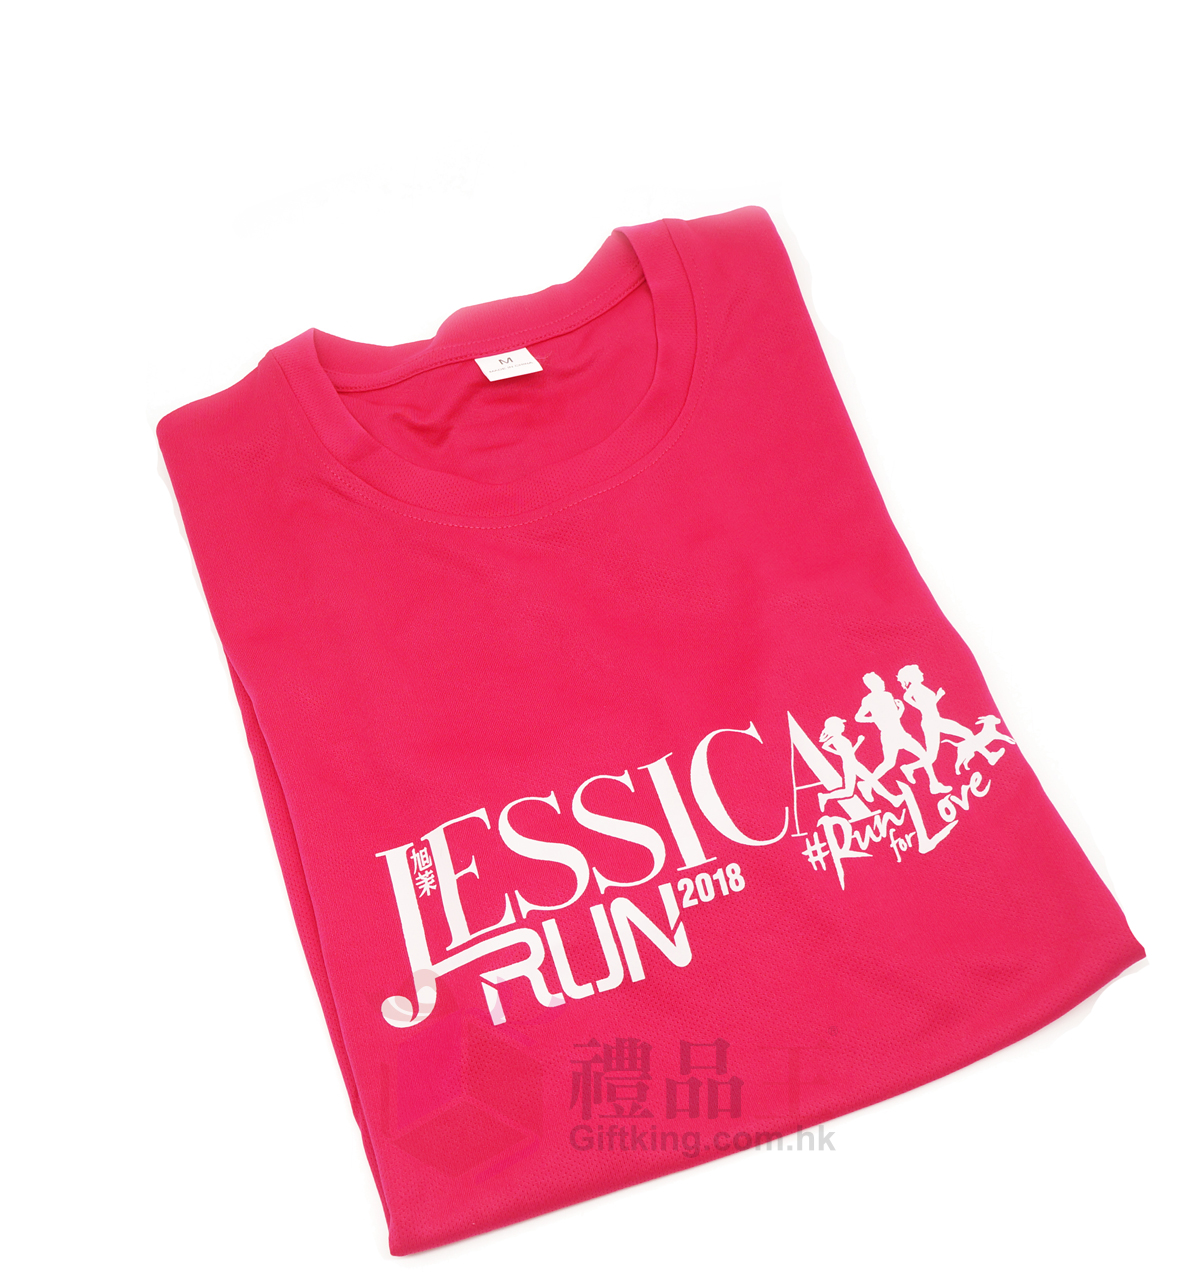 Jessica run 慈善跑T恤 (服饰礼品)